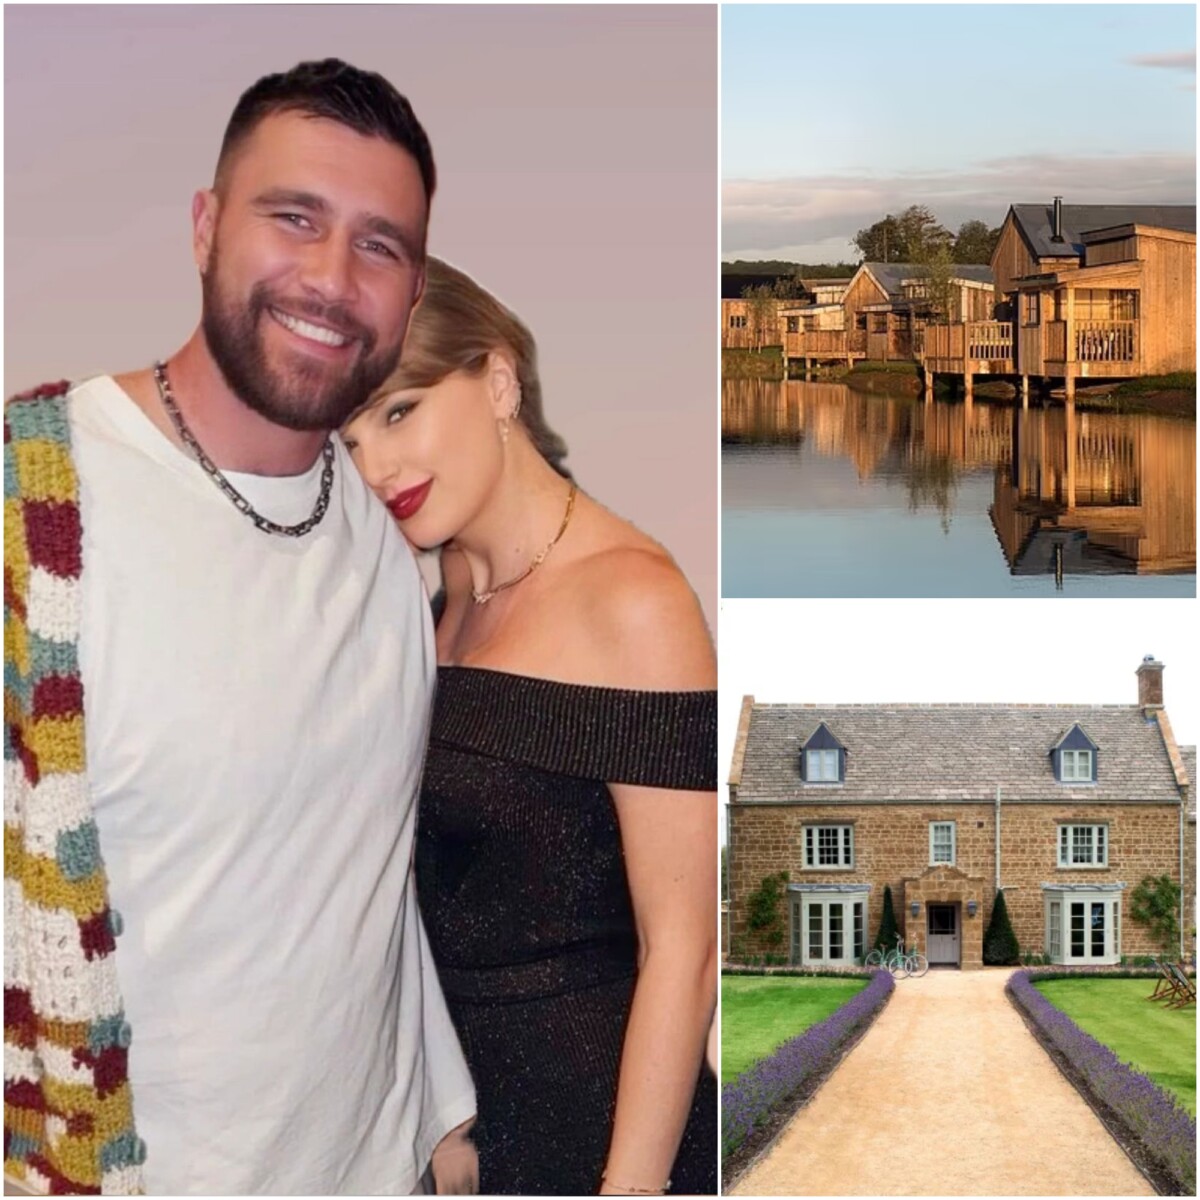 Taylor Swift and boyfriend Travis Kelce will enjoy a lavish break in a £3.3 million Cotswolds cottage during their Eras UK tour.